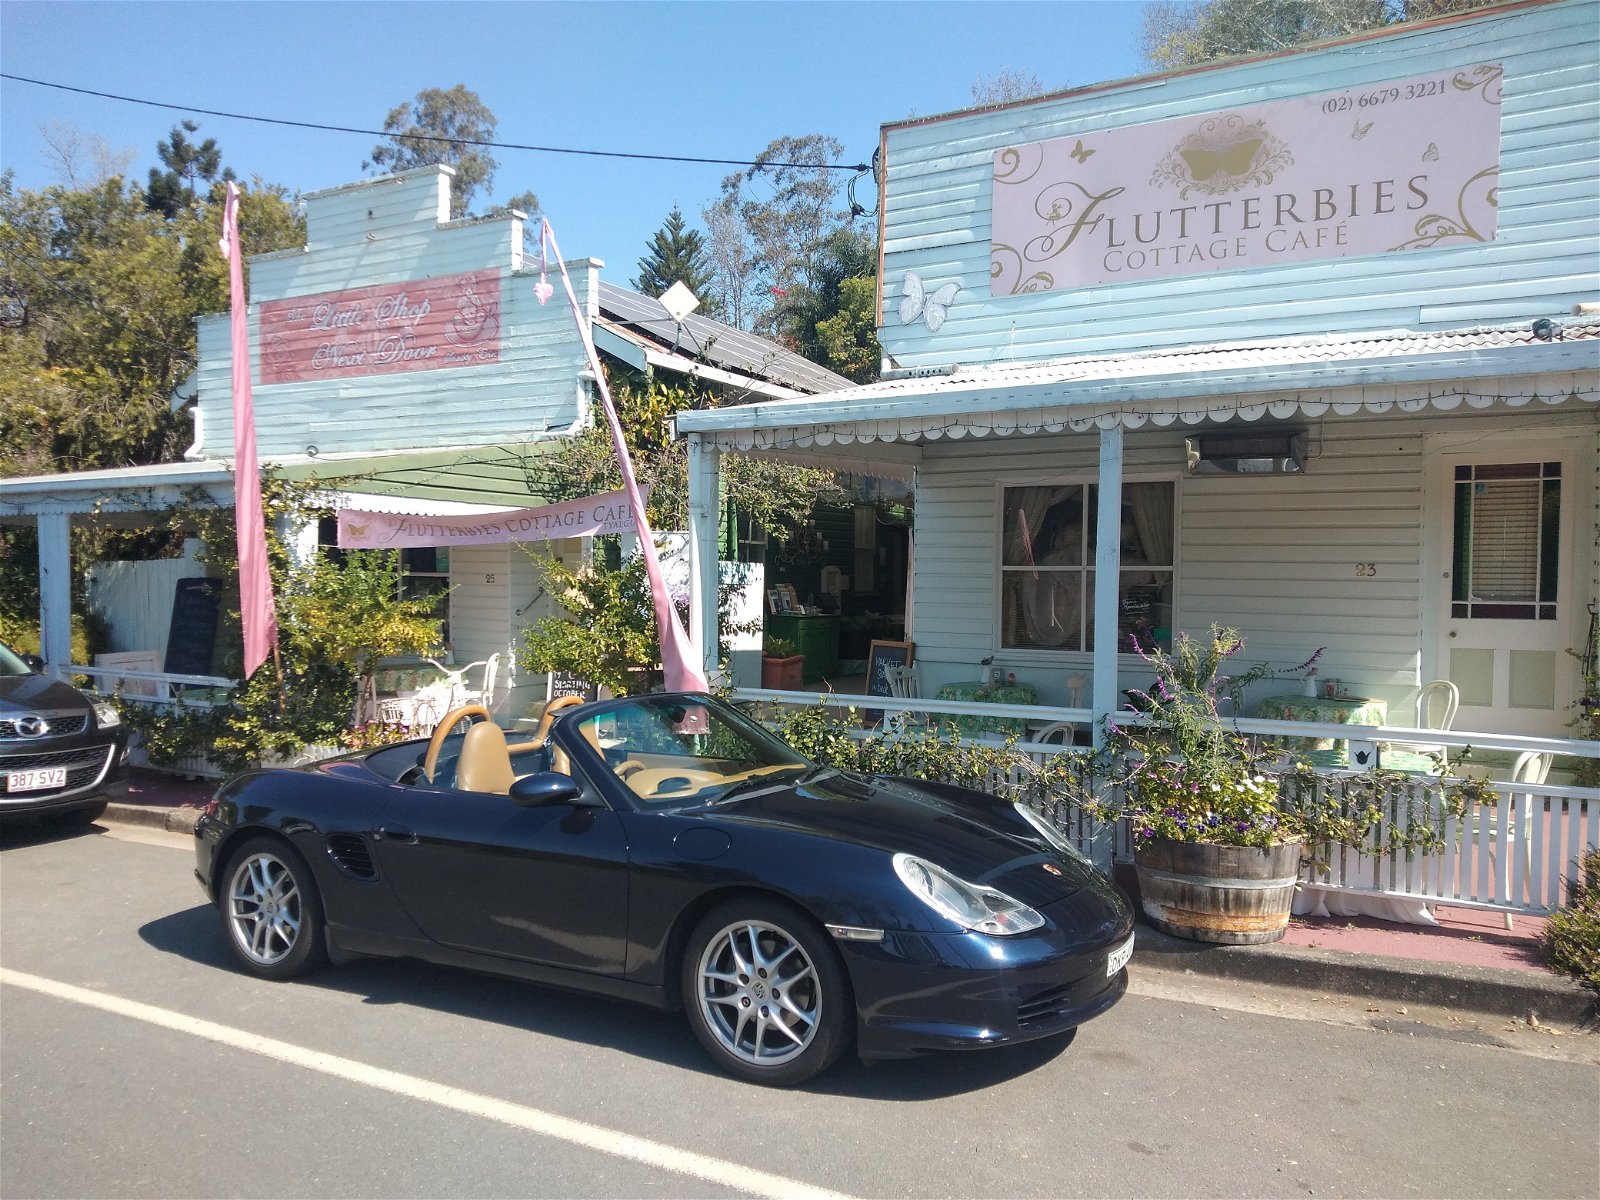 Flutterbies Cottage Cafe - Tourism Gold Coast